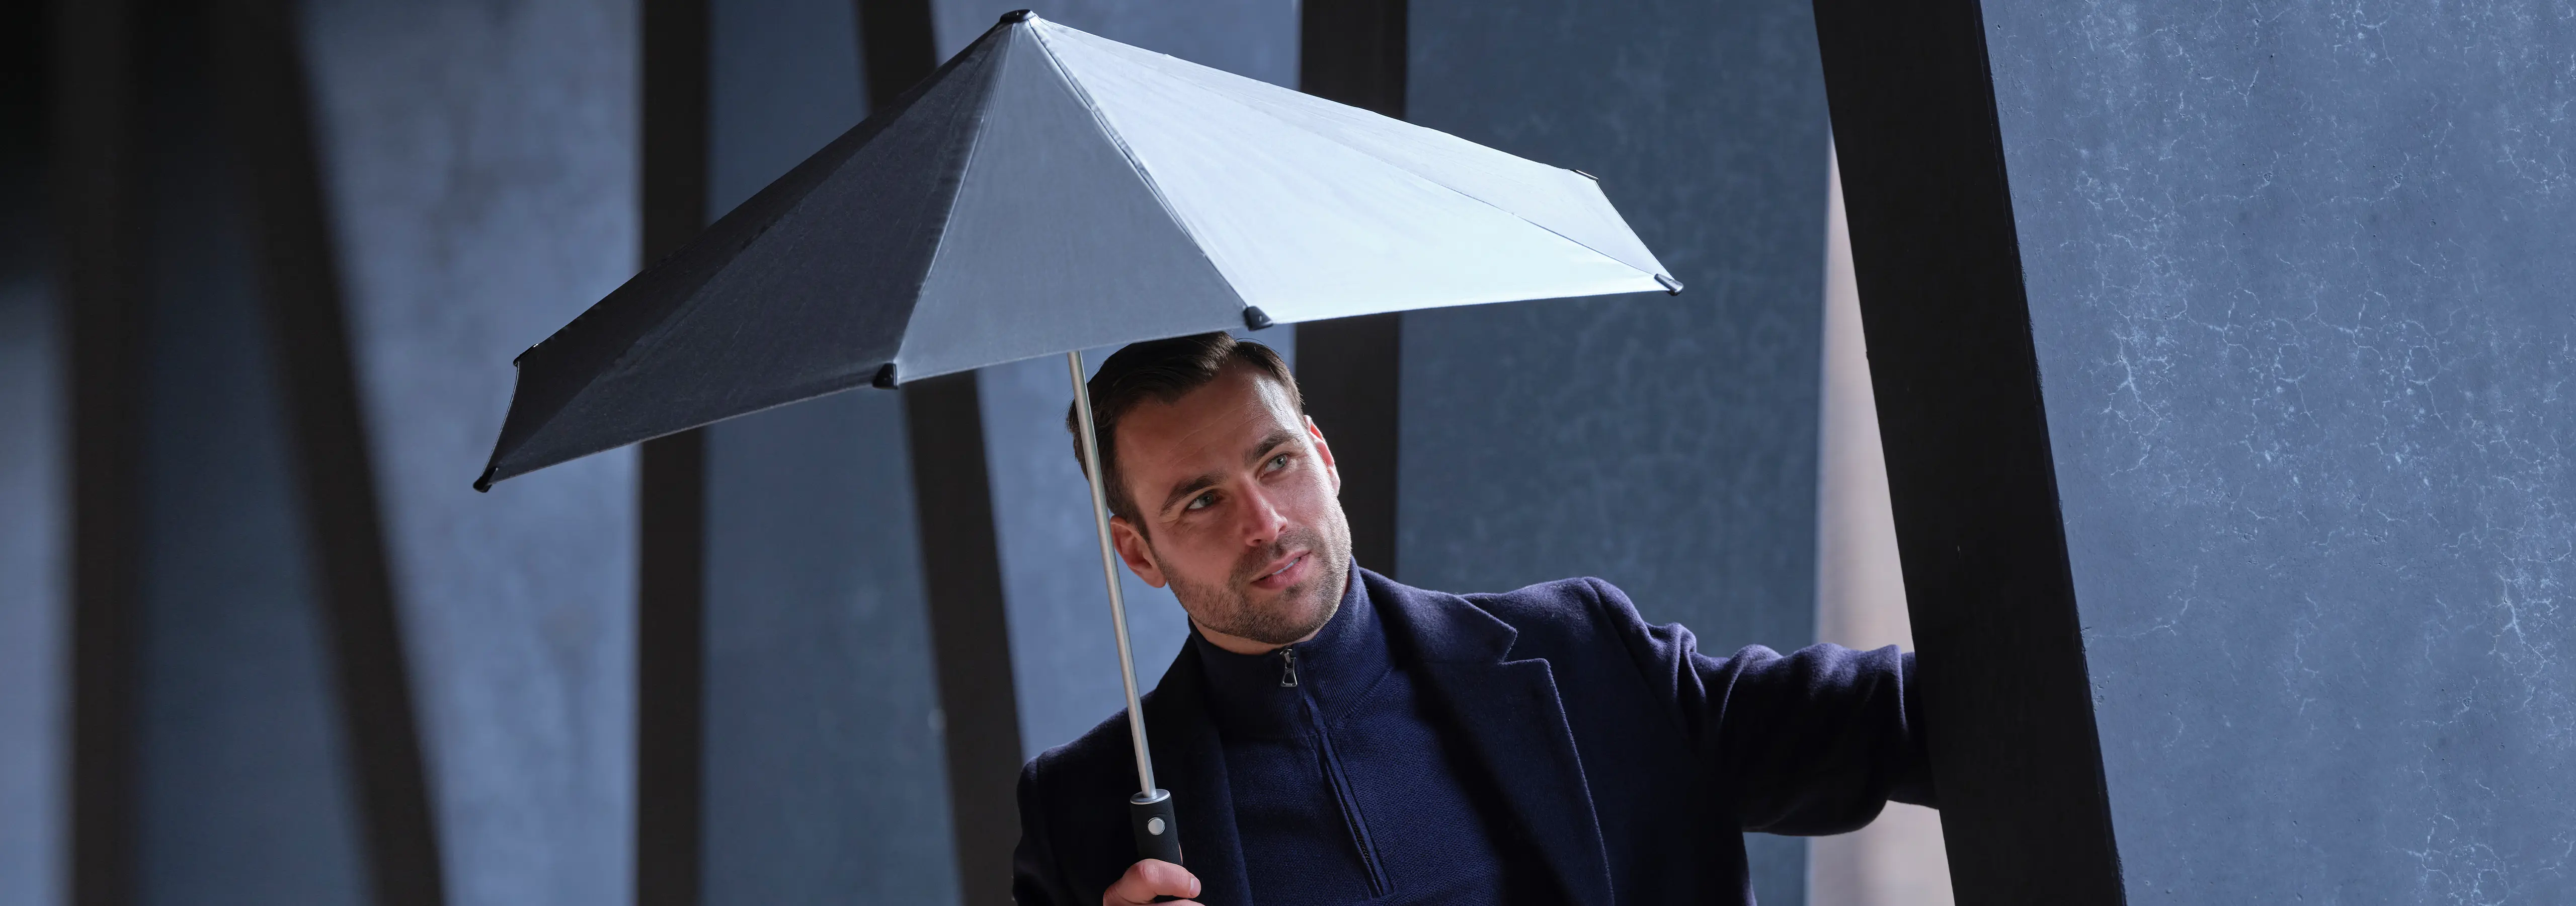 windproof umbrella by senz° Buy the original on